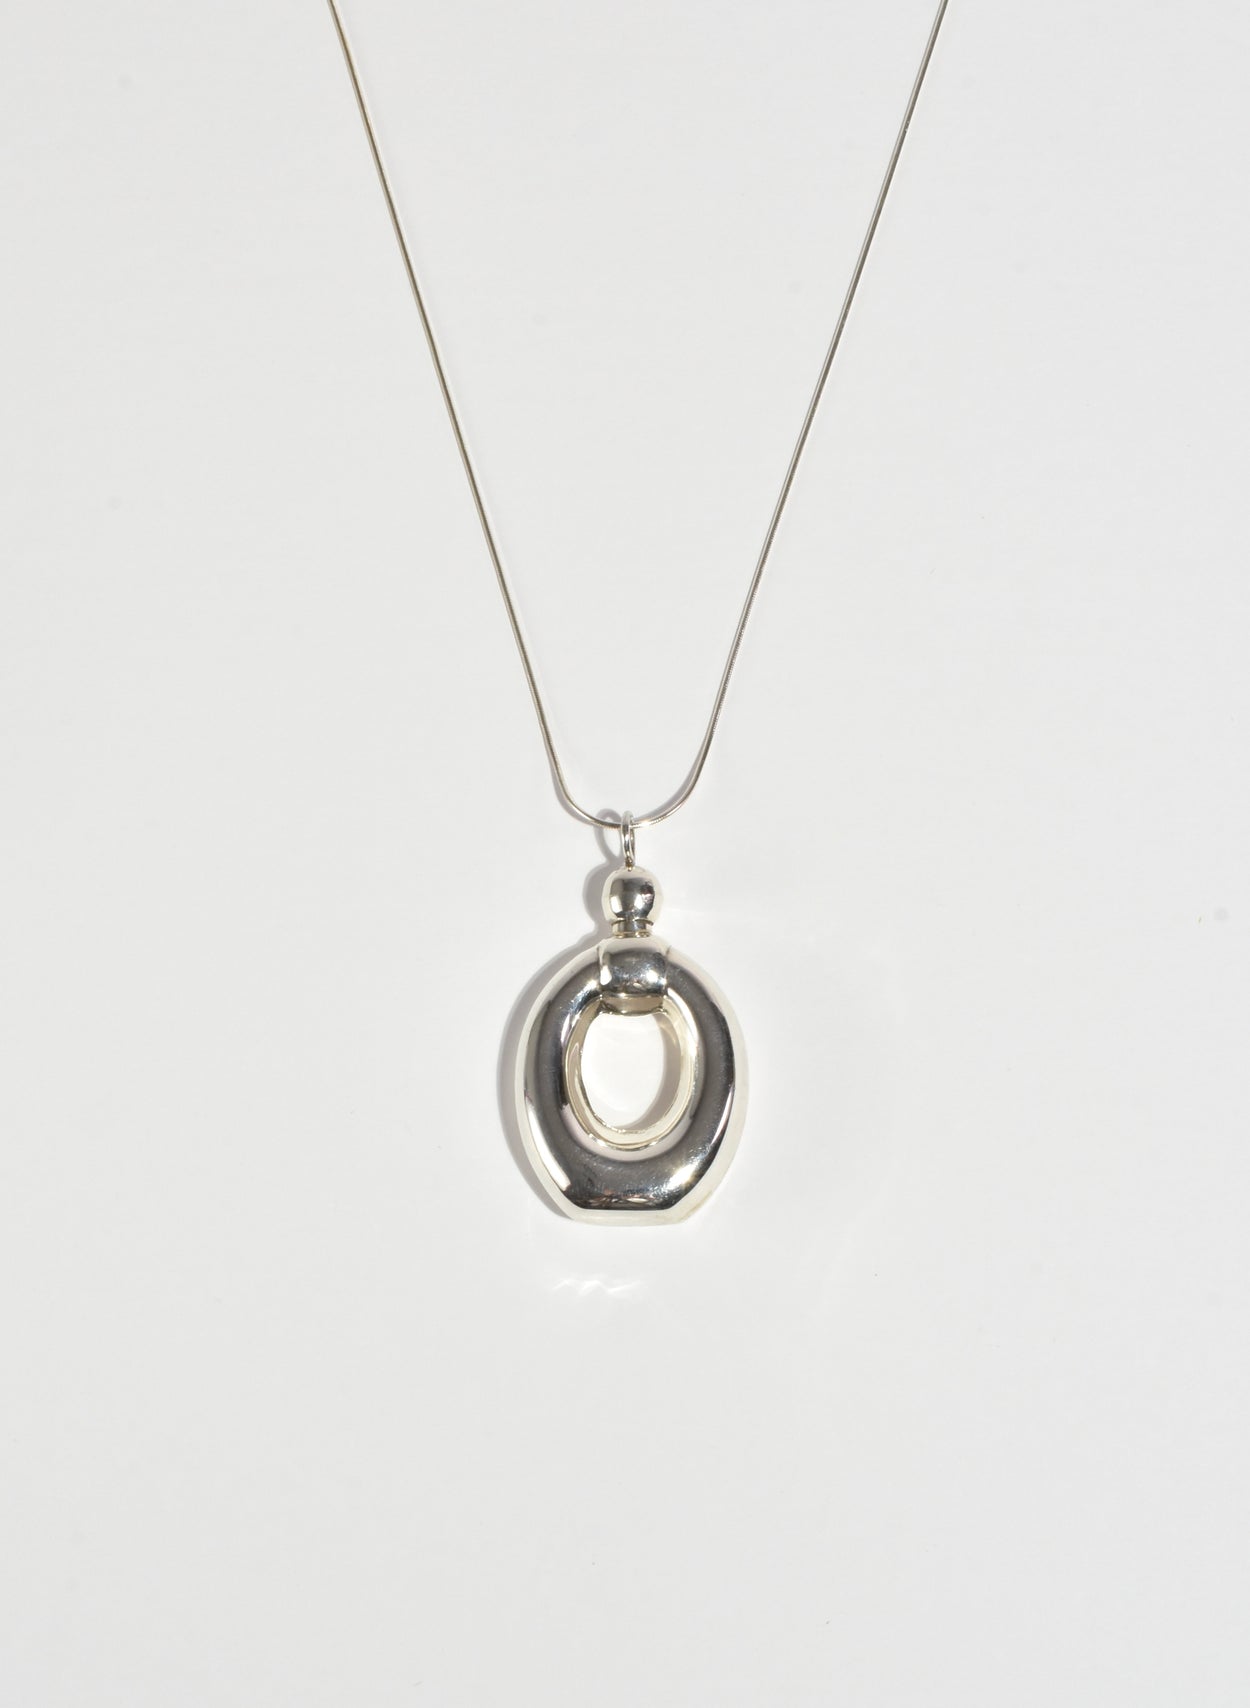 Oval Perfume Bottle Pendant Necklace